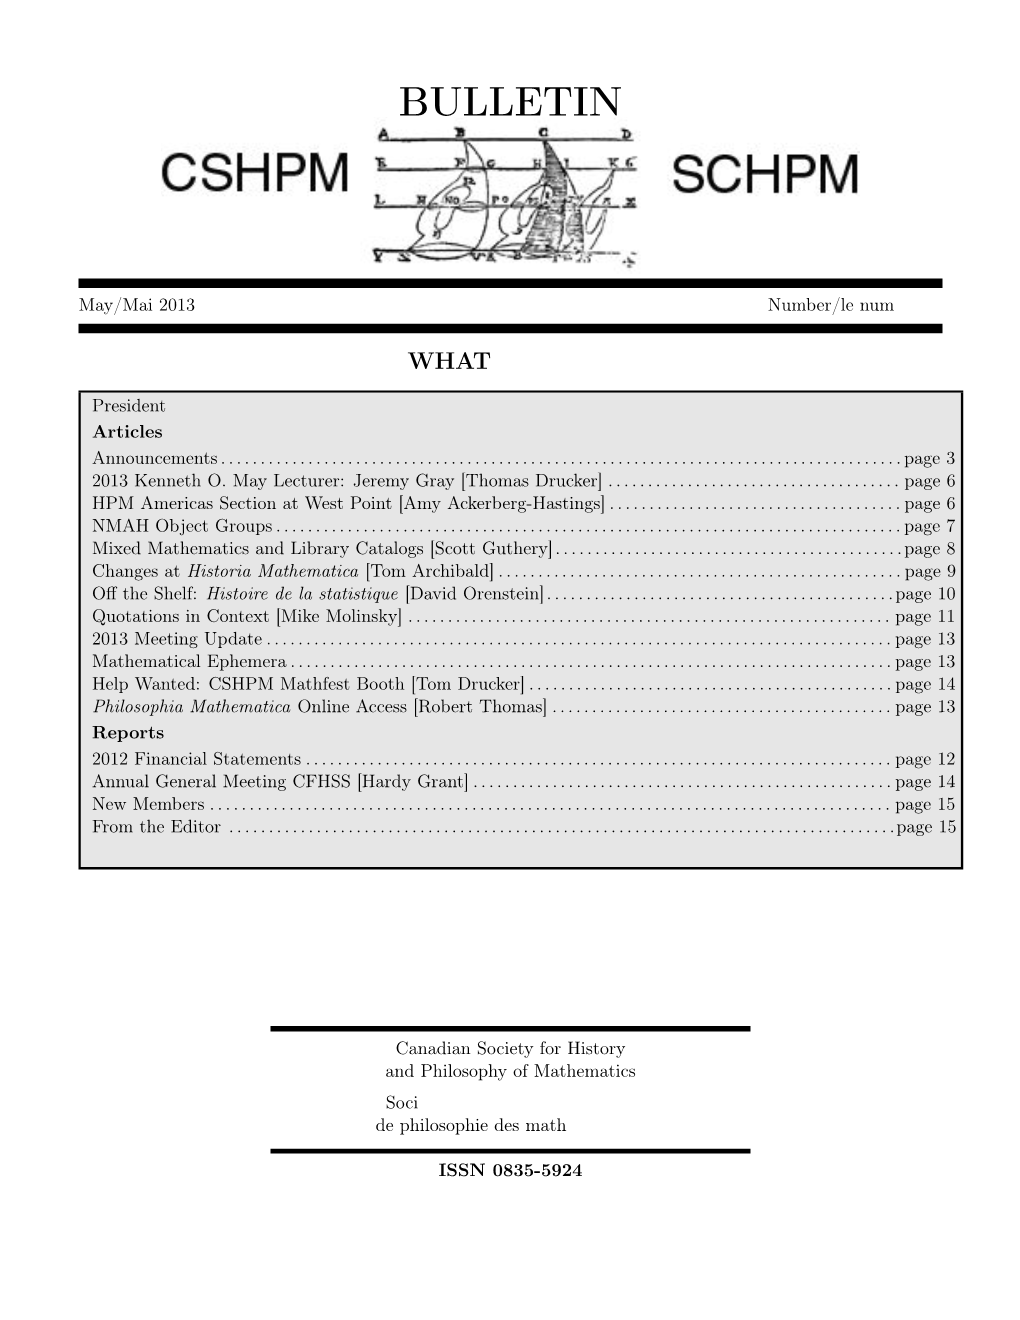 CSHPM Bulletin, May 2013